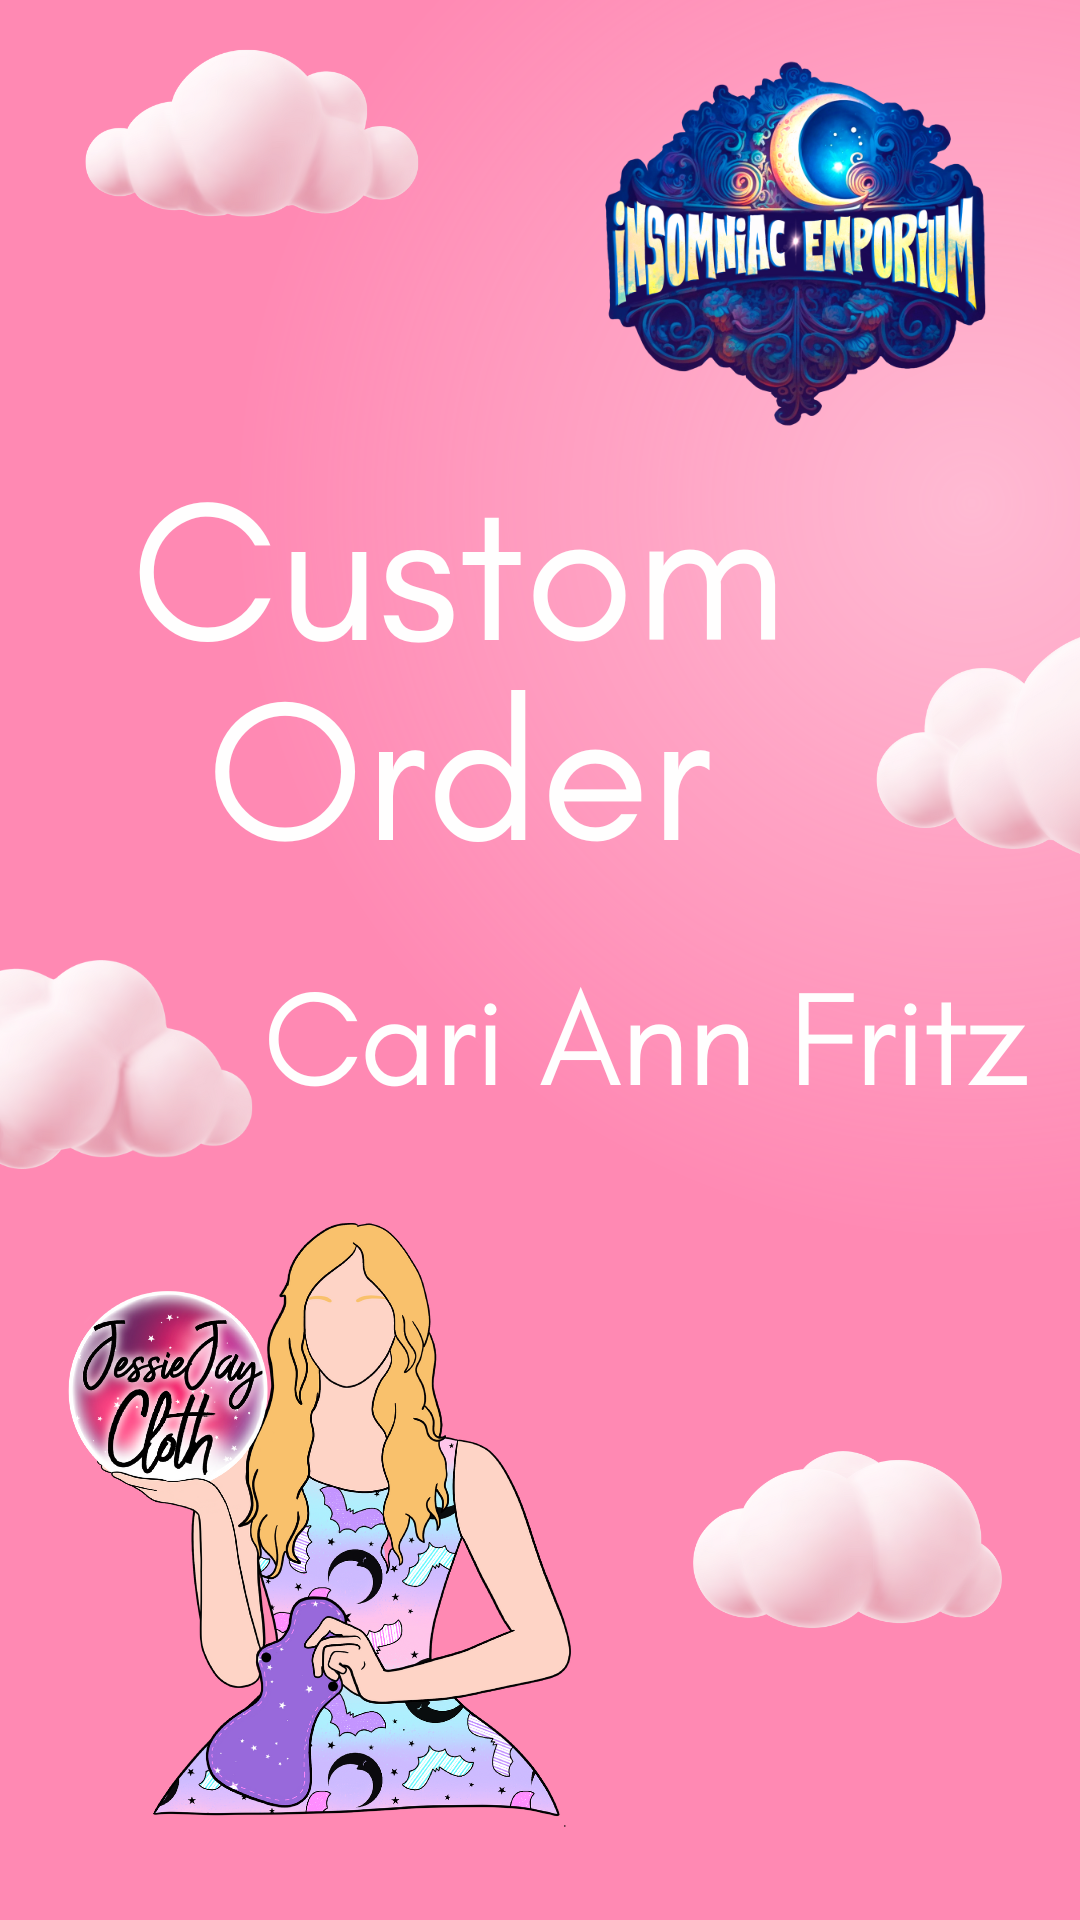 Custom Order Cari Ann Fritz | PayPal can be chosen at checkout